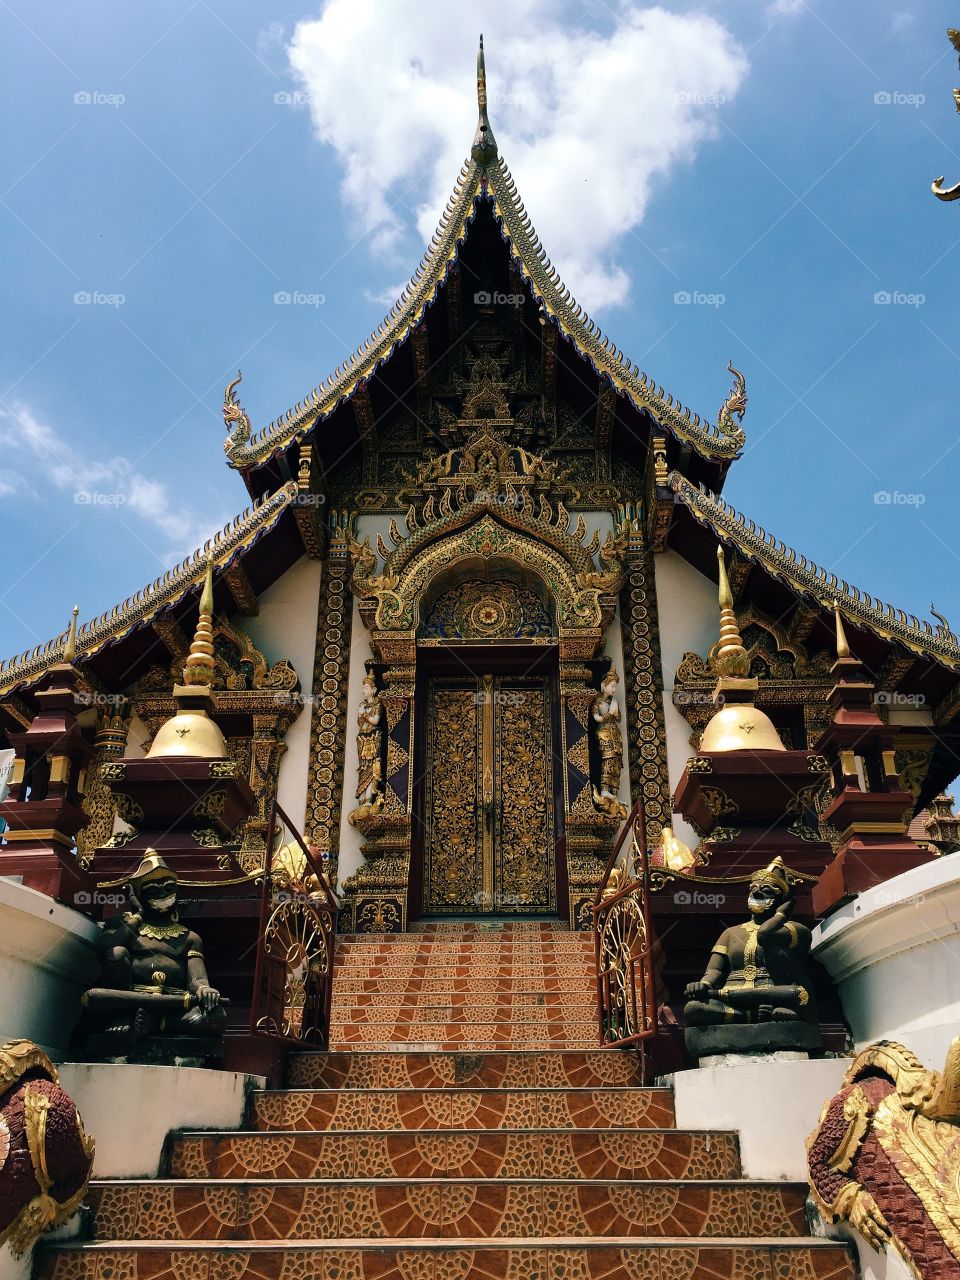 Amazing Temple in Thailand.